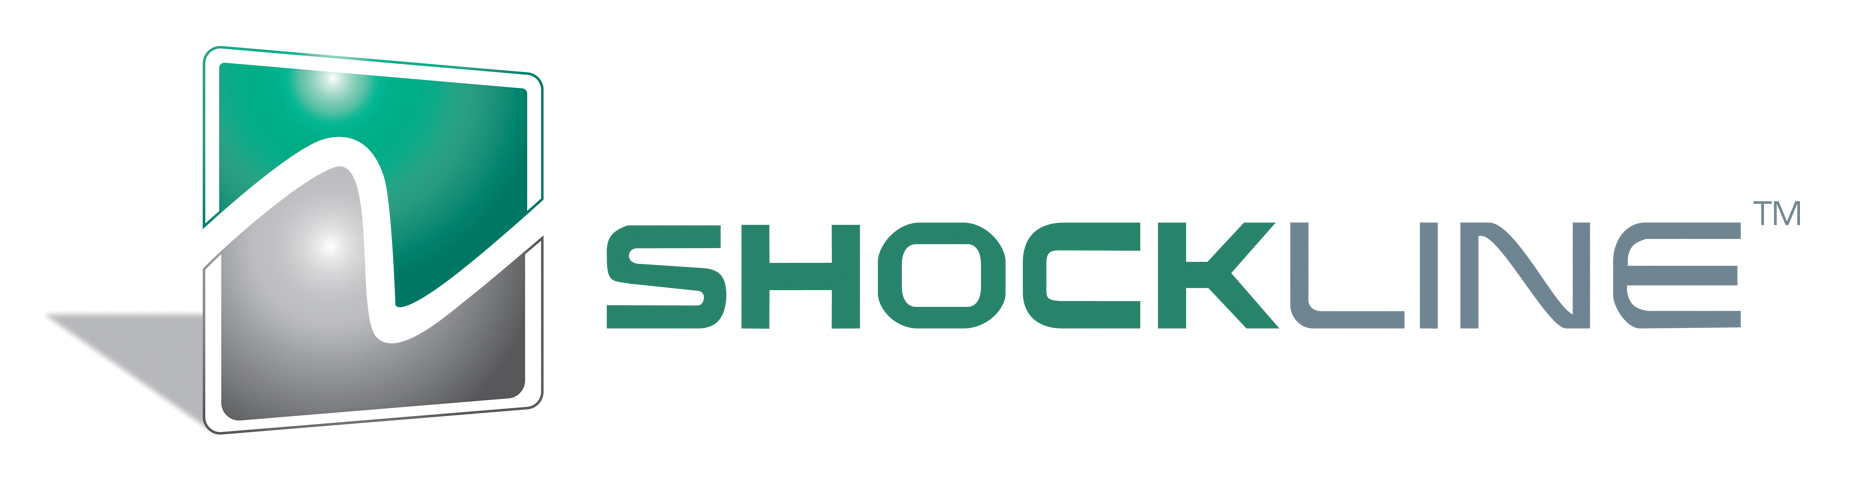 shockline-logo.jpg